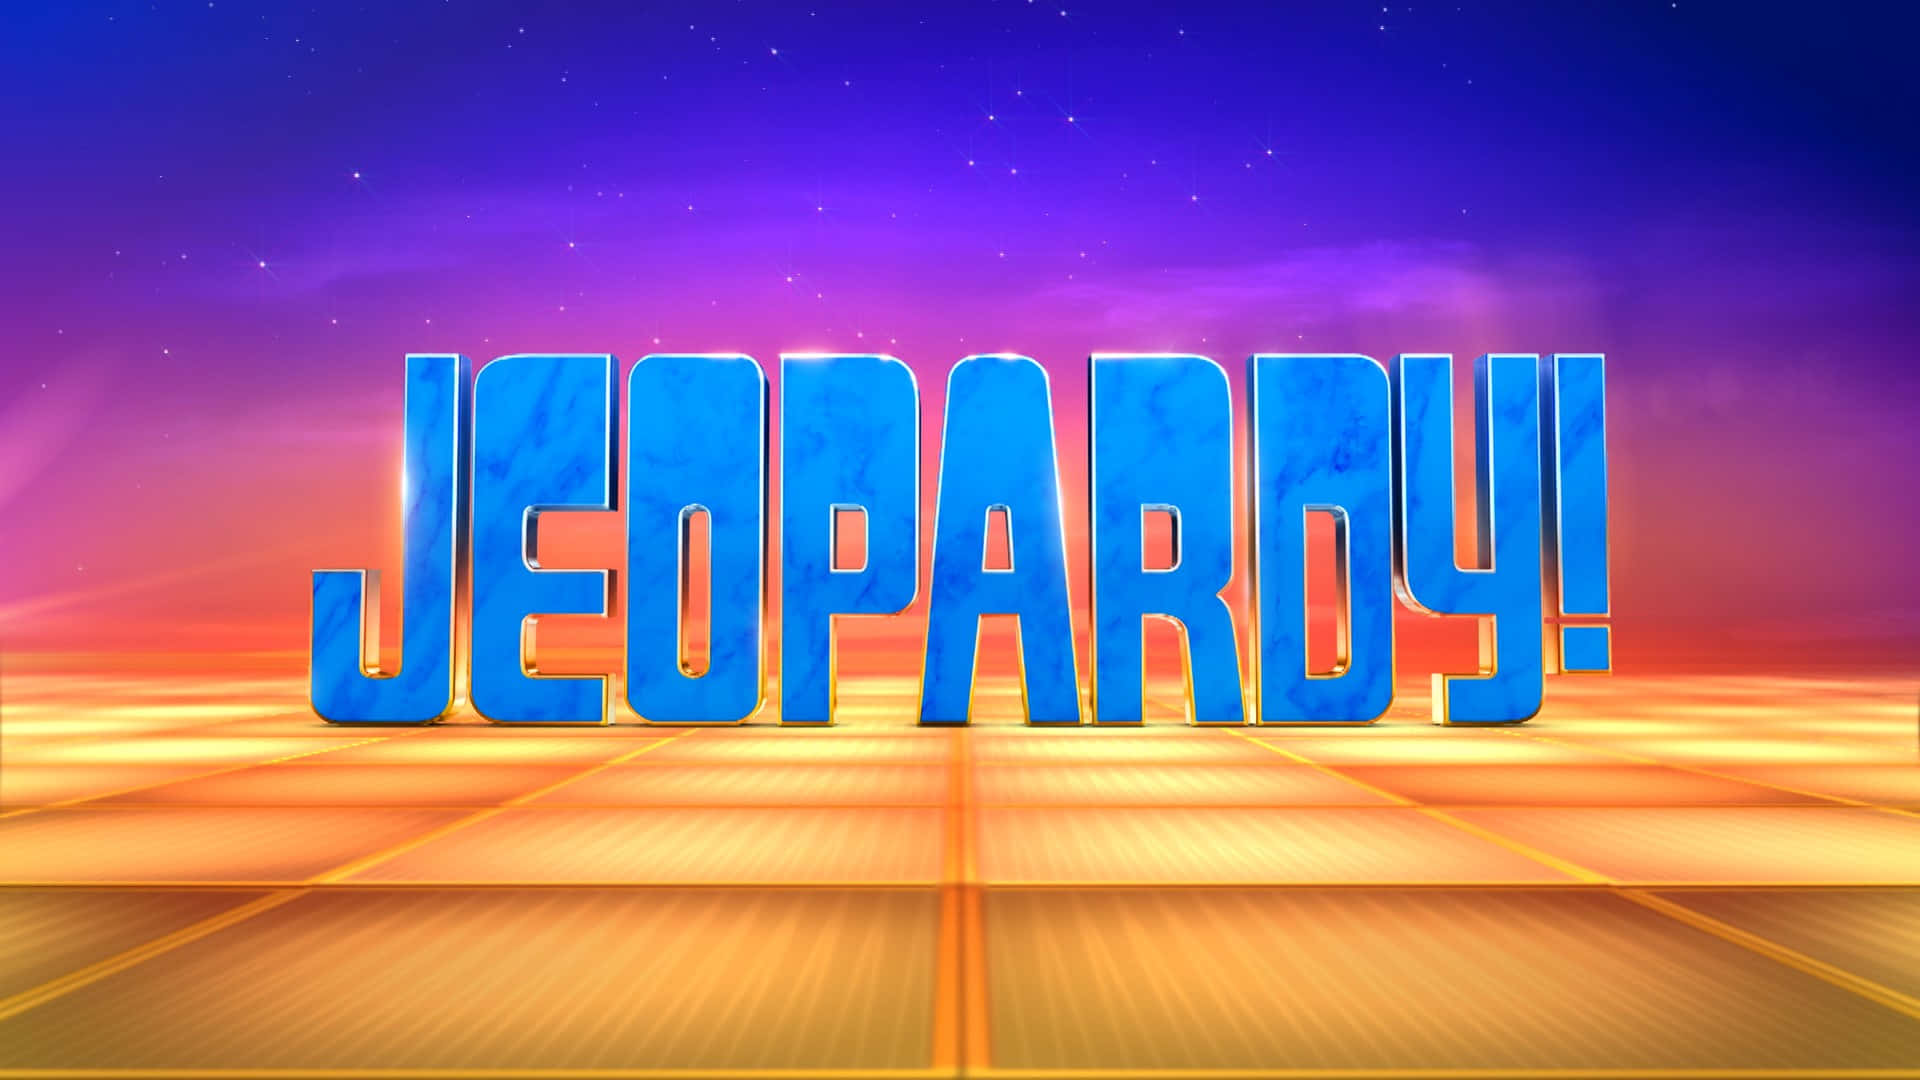 Jeopardy Logo With A Blue Background